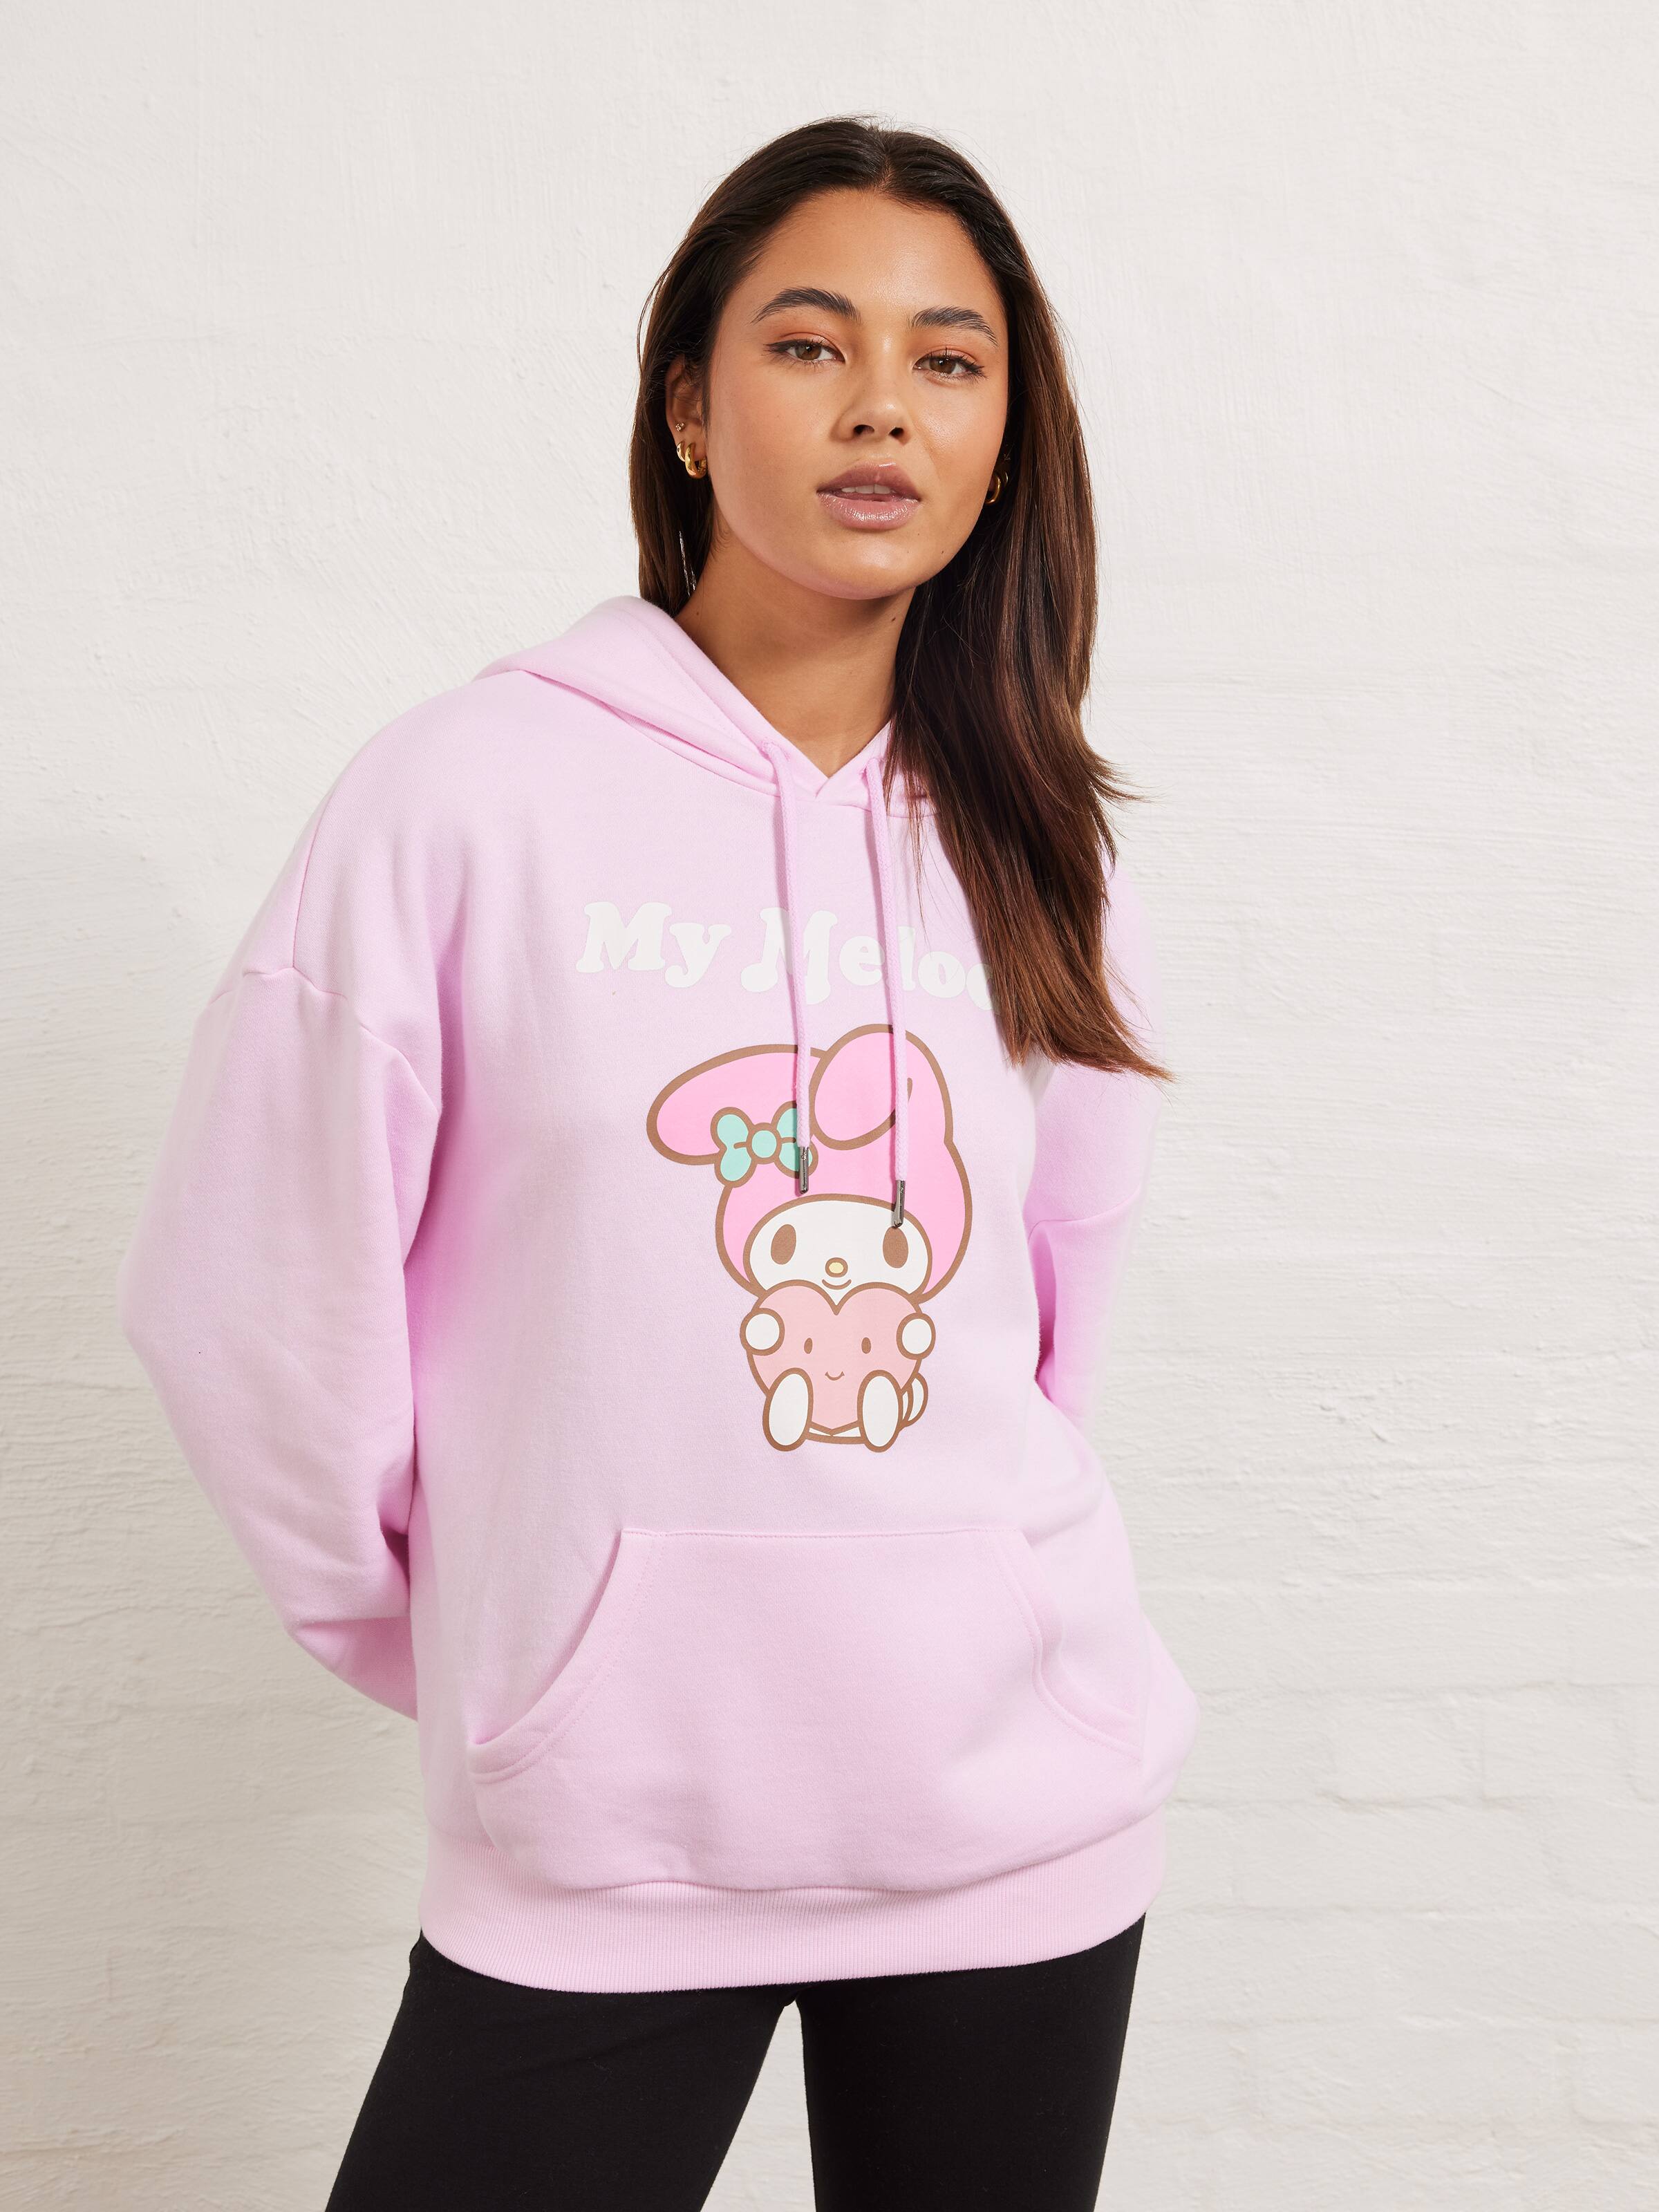 USA zip up hoodie/ pink brand hoodie - clothing & accessories - by